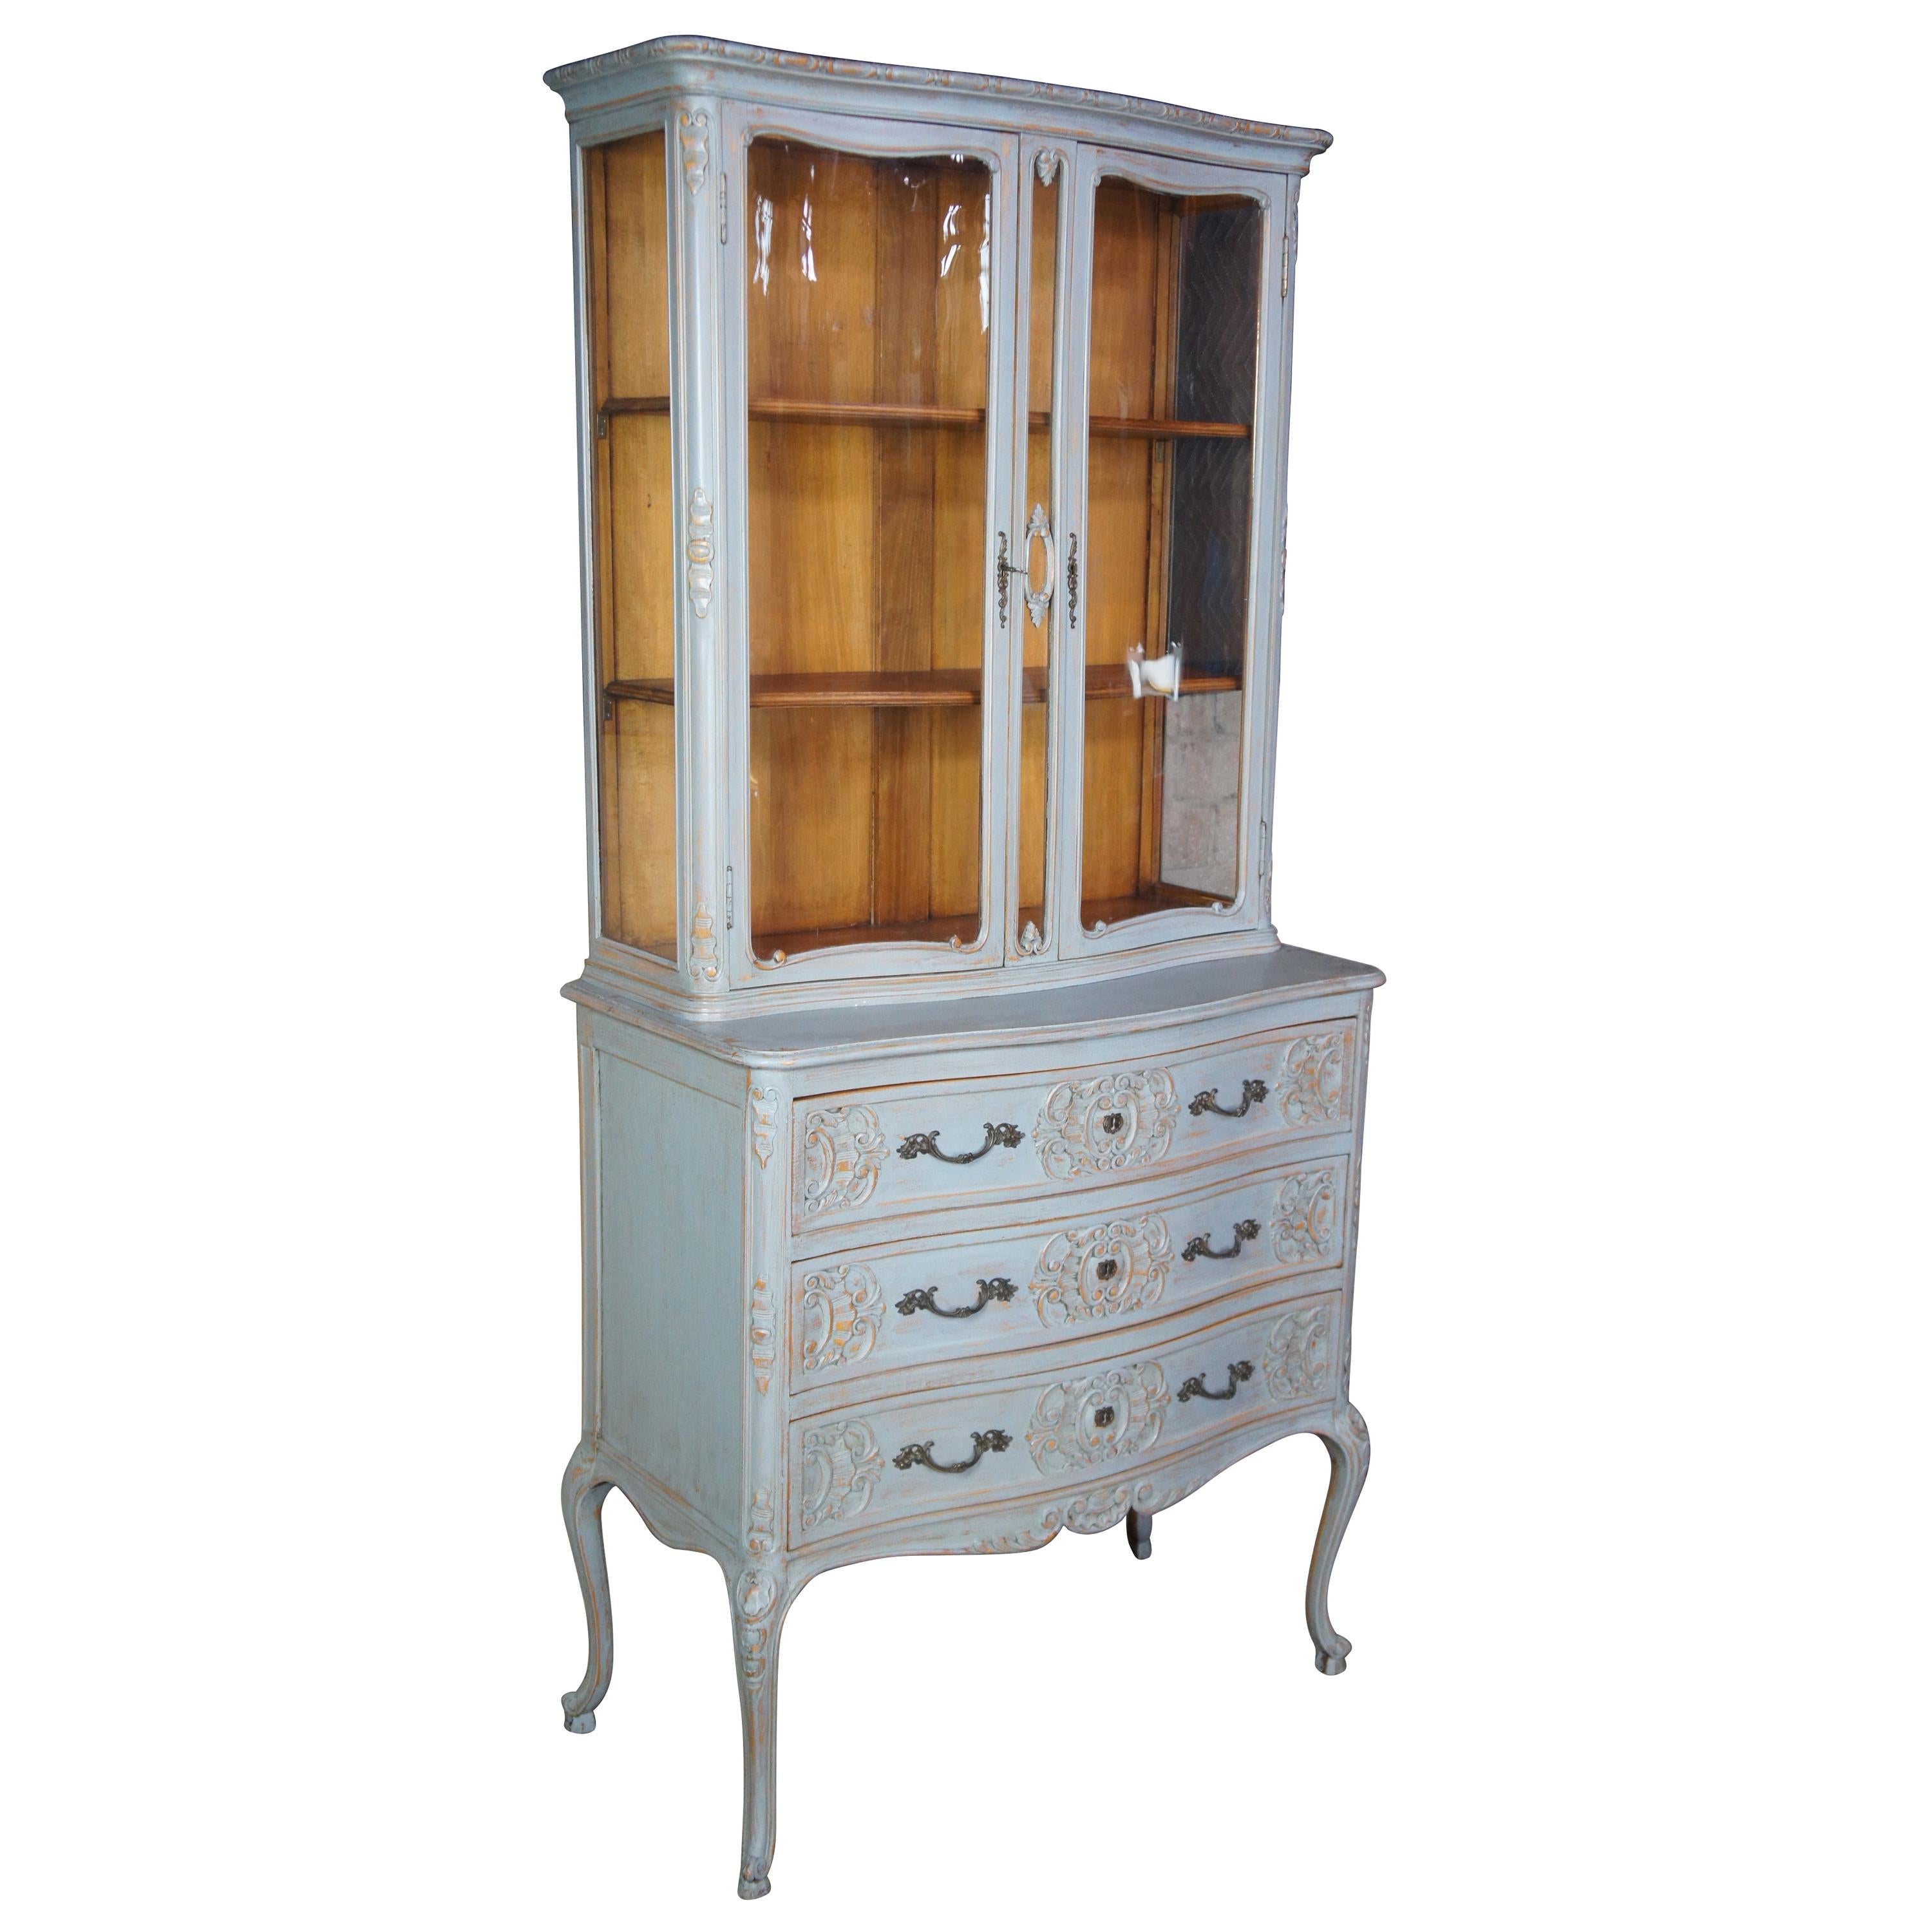 Antique French Painted Oak Curio Display Cabinet Lowboy Dresser Hutch Cupboard